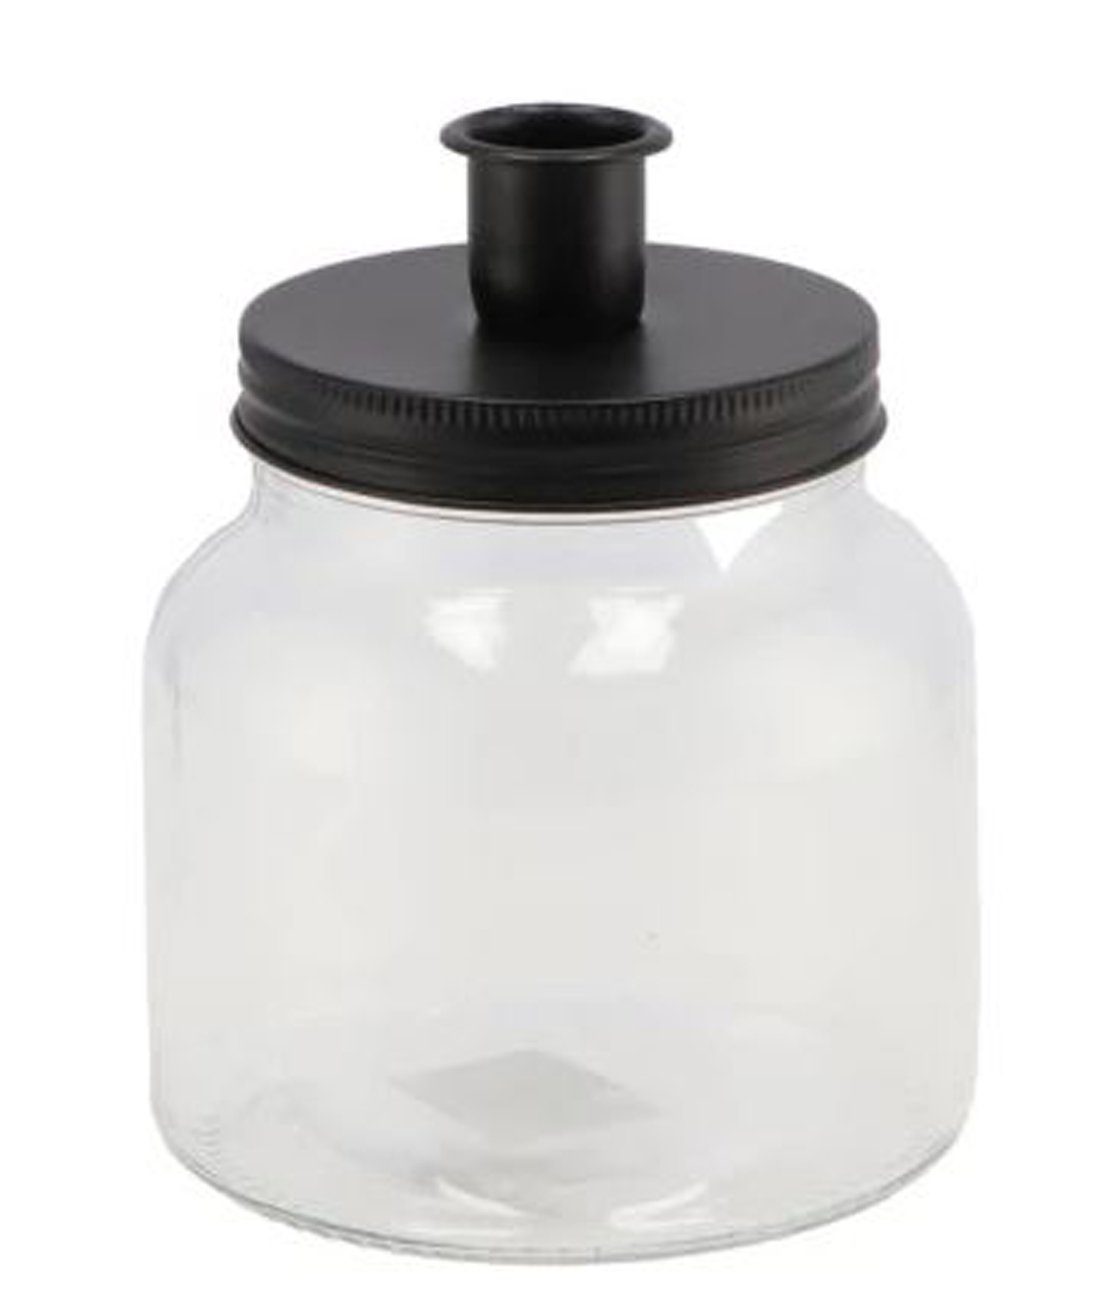 Daan Kromhout Kerzenhalter Kerzenhalter Glas 11 x 11 cm klar / schwarz Drehverschluss (1 St)